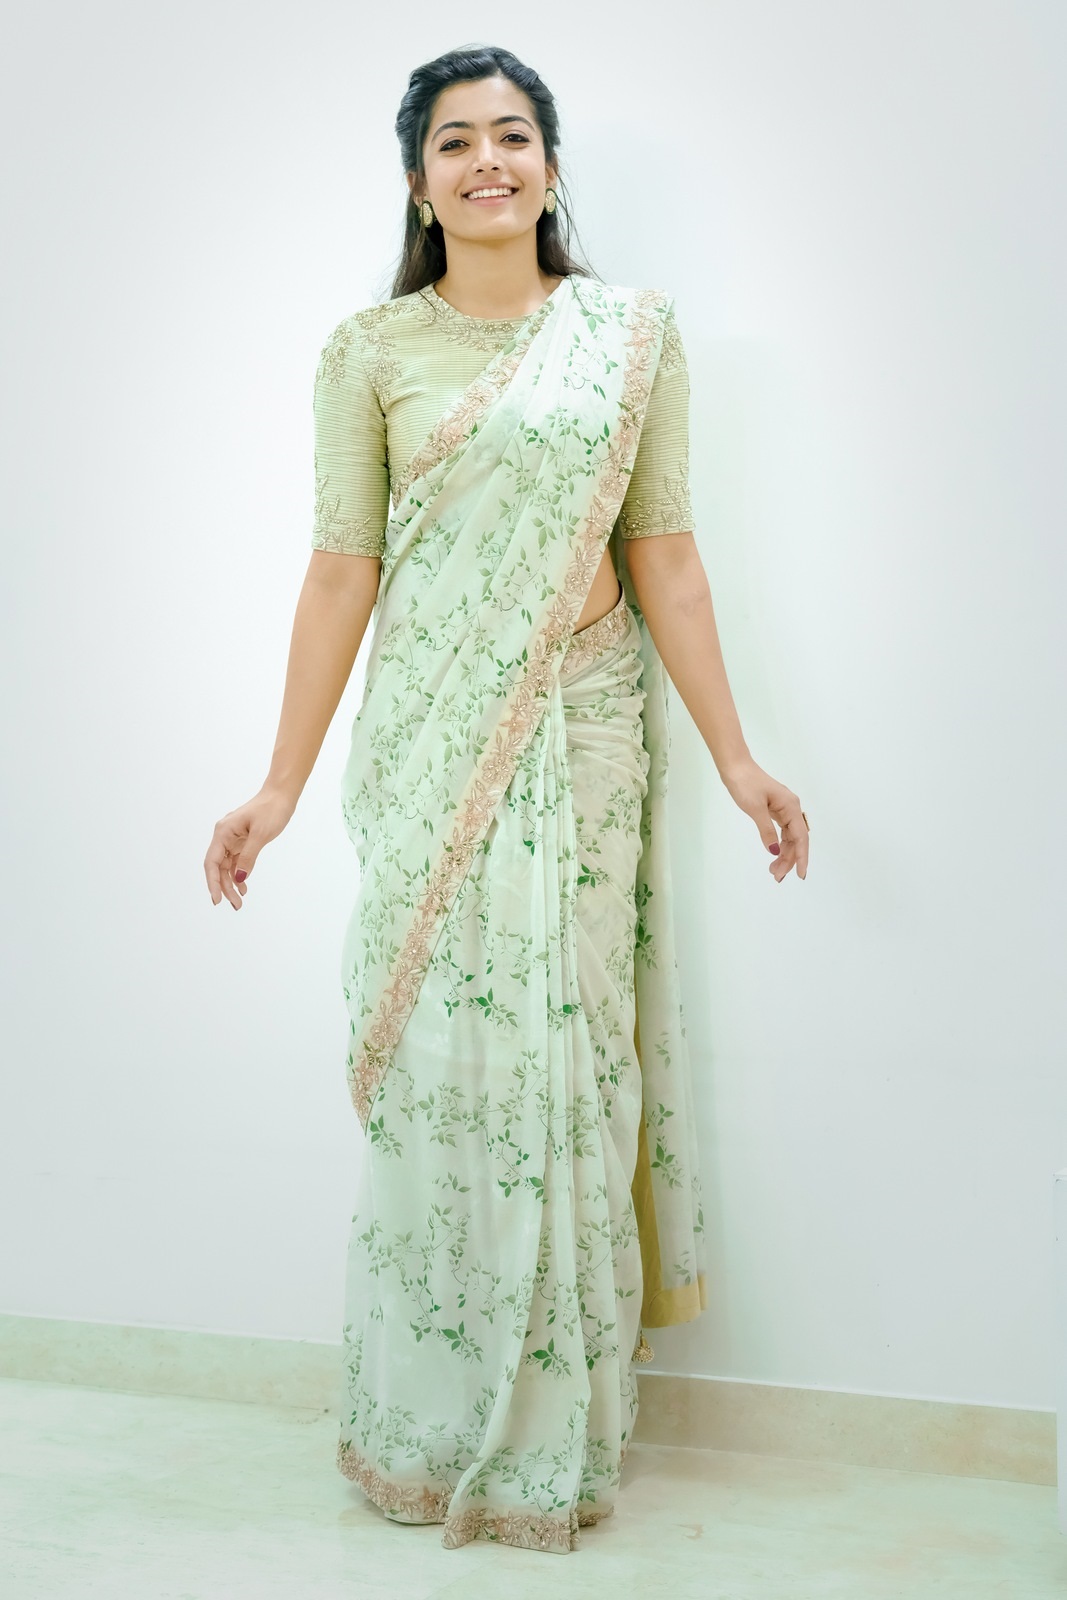 Rashmika Mandanna New Hot Photos in White Saree